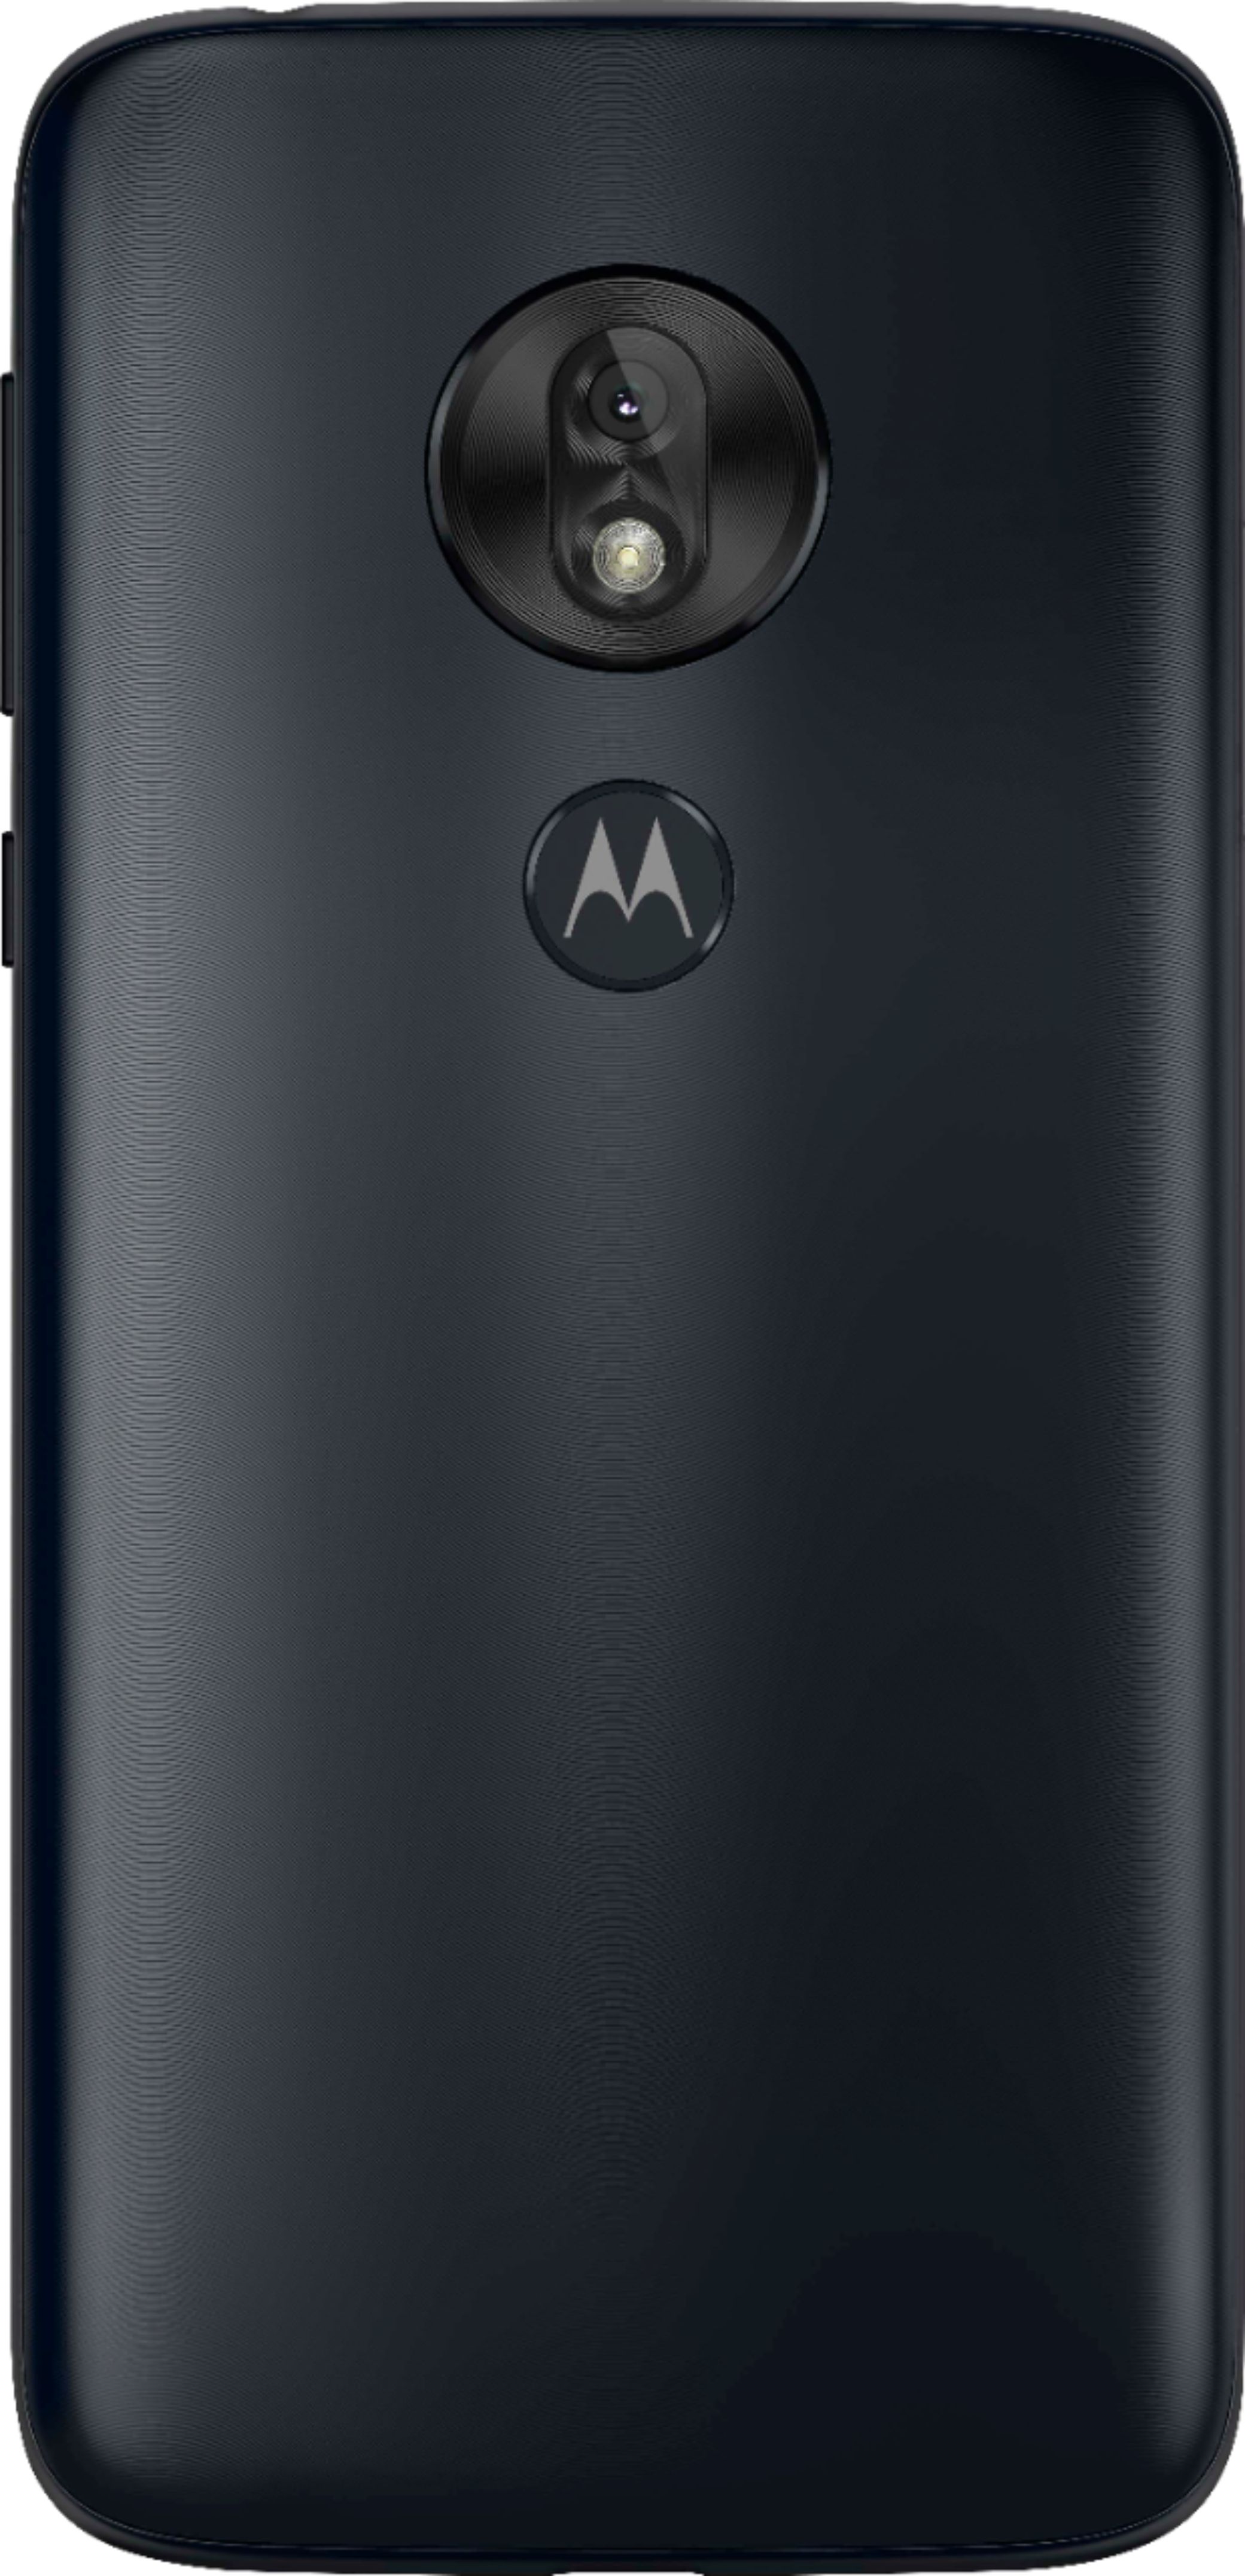 Motorola Moto G7 Play - Full phone specifications